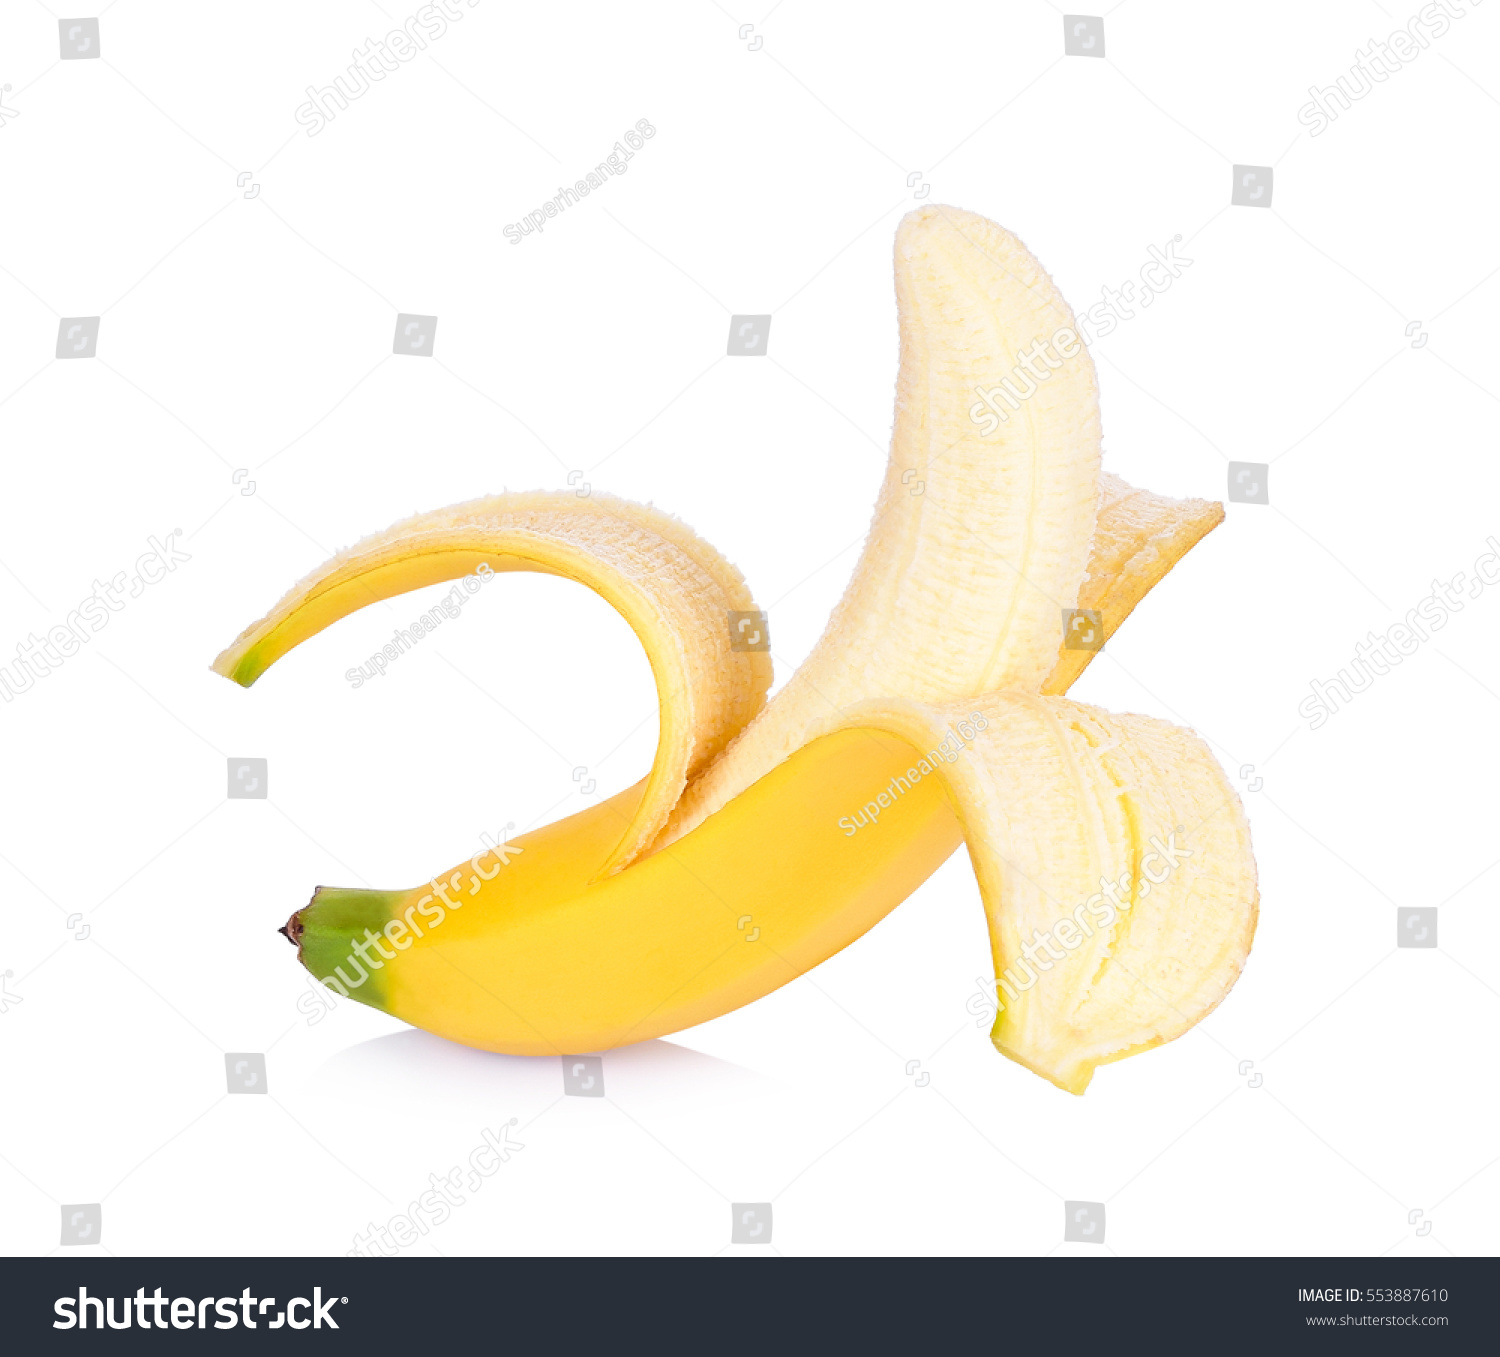 Half peeled Banana, Open Banana isolated on a white background. #553887610